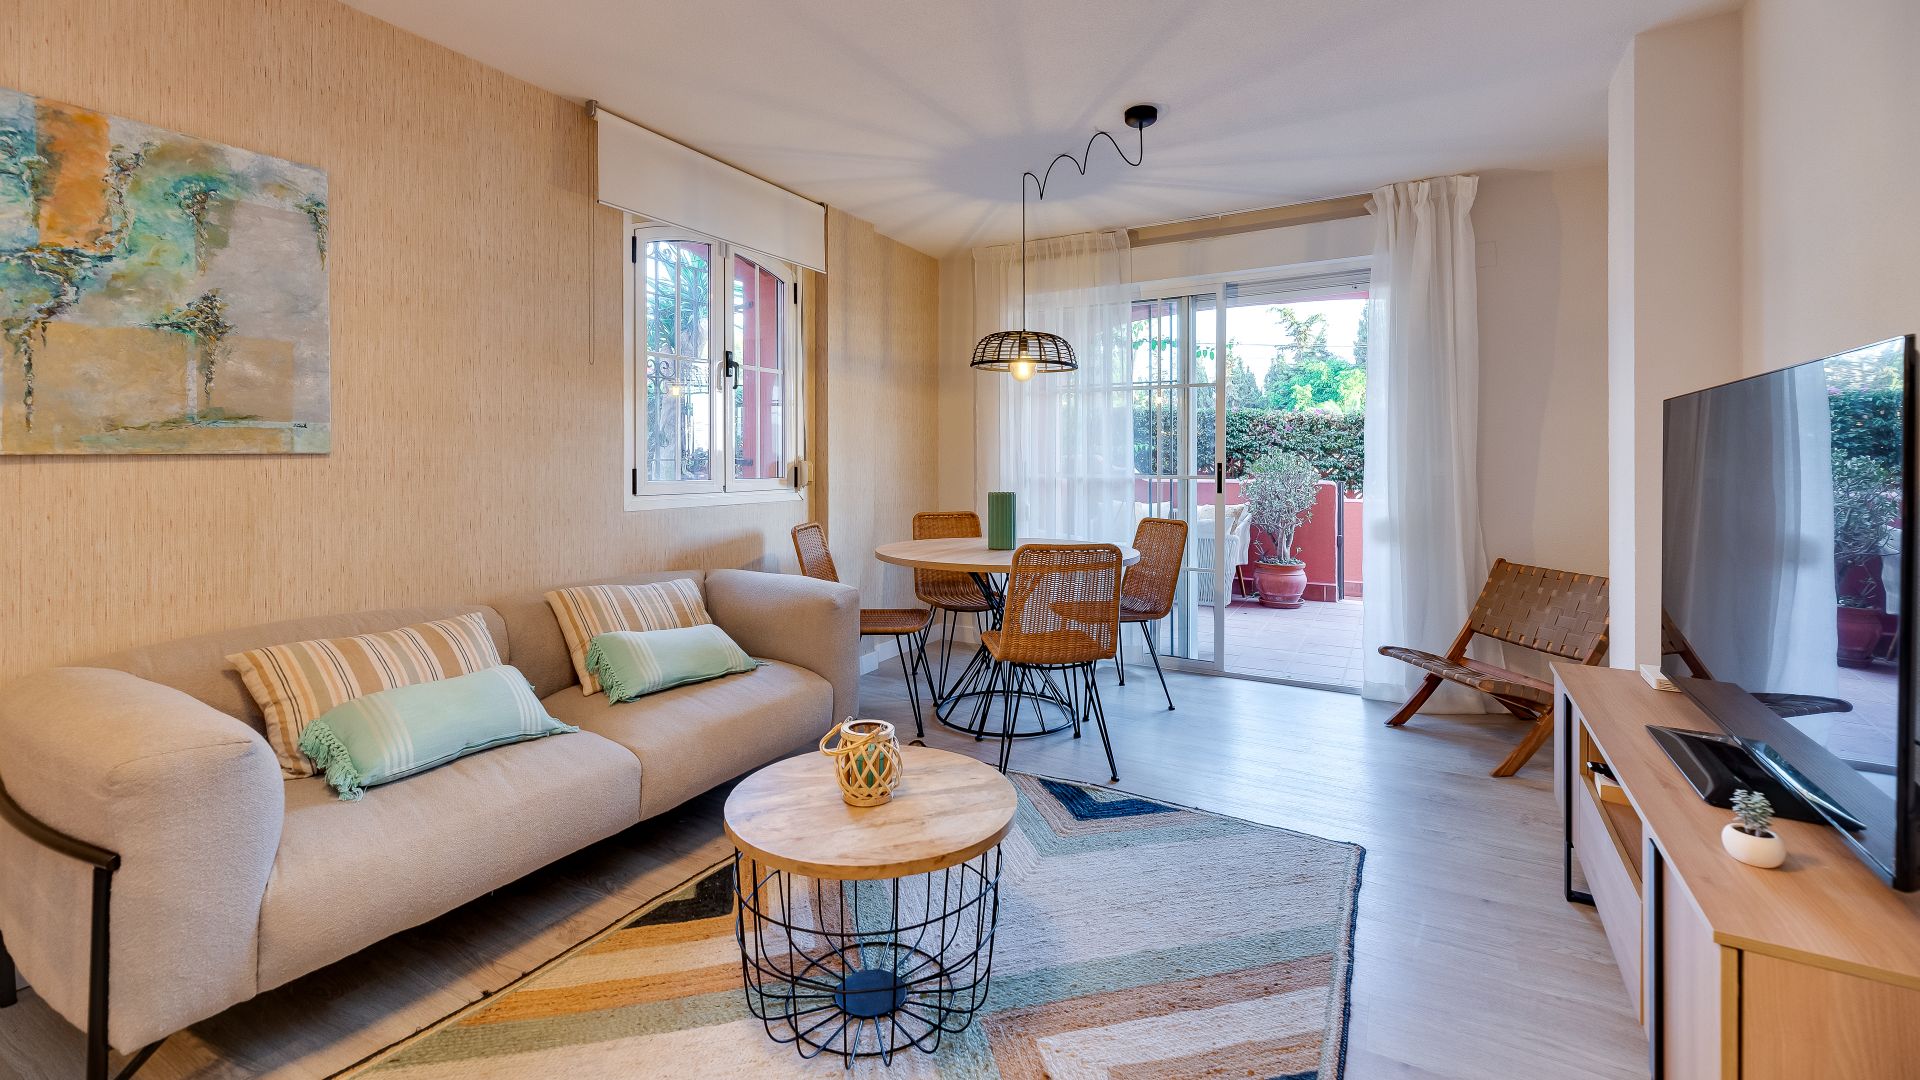 Bright and modern apartment next to the beach | Engel & Völkers Marbella